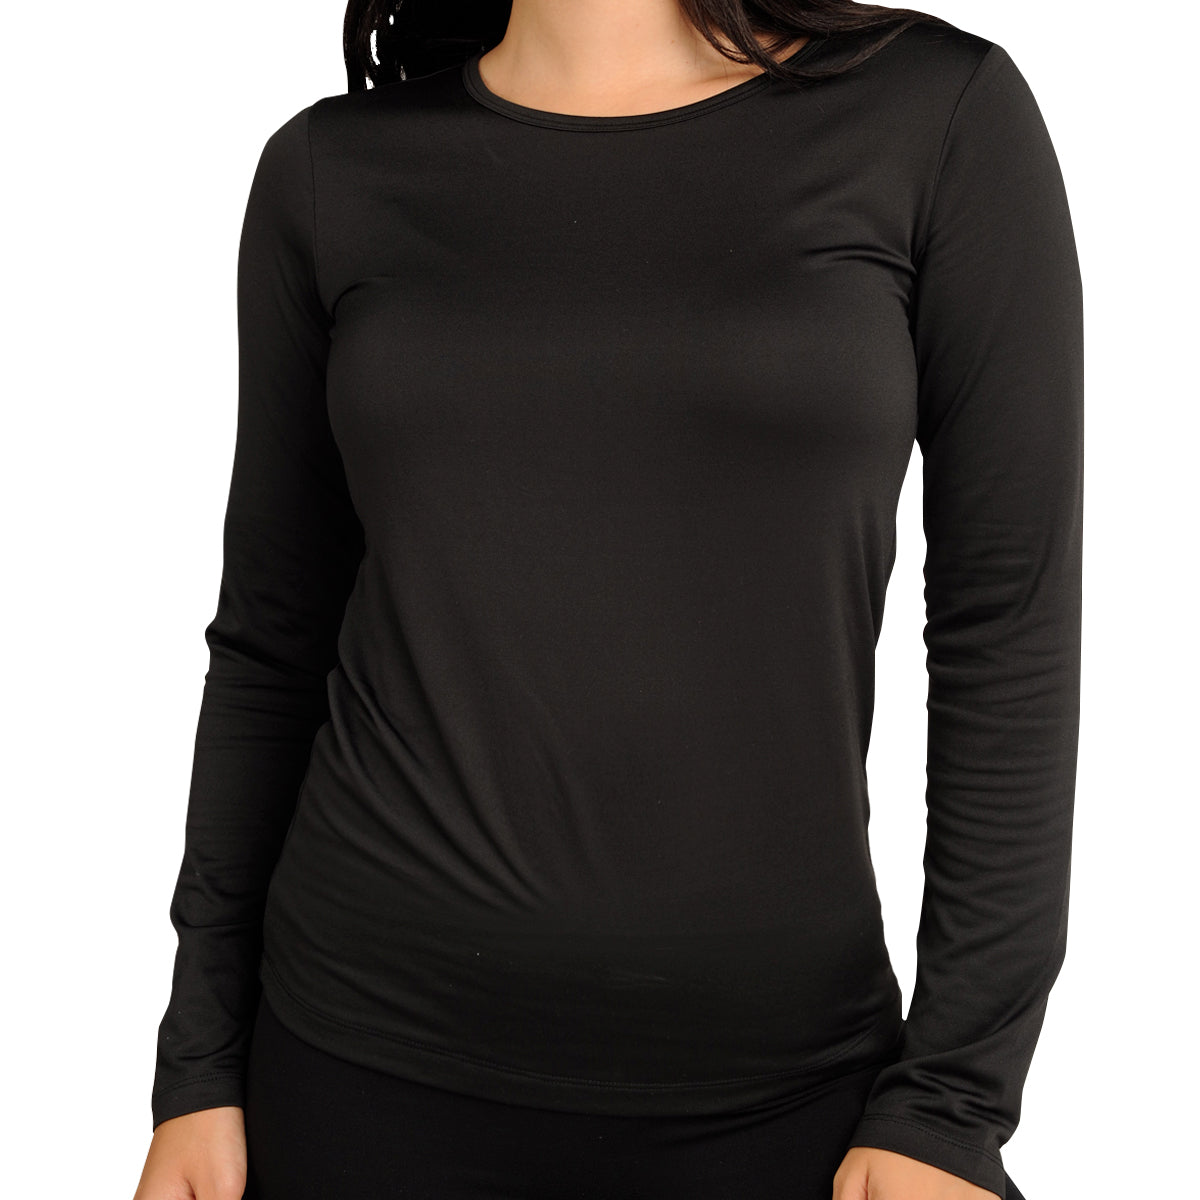 Camiseta Mujer Microfibra Negra Térmica Redondo Underwear